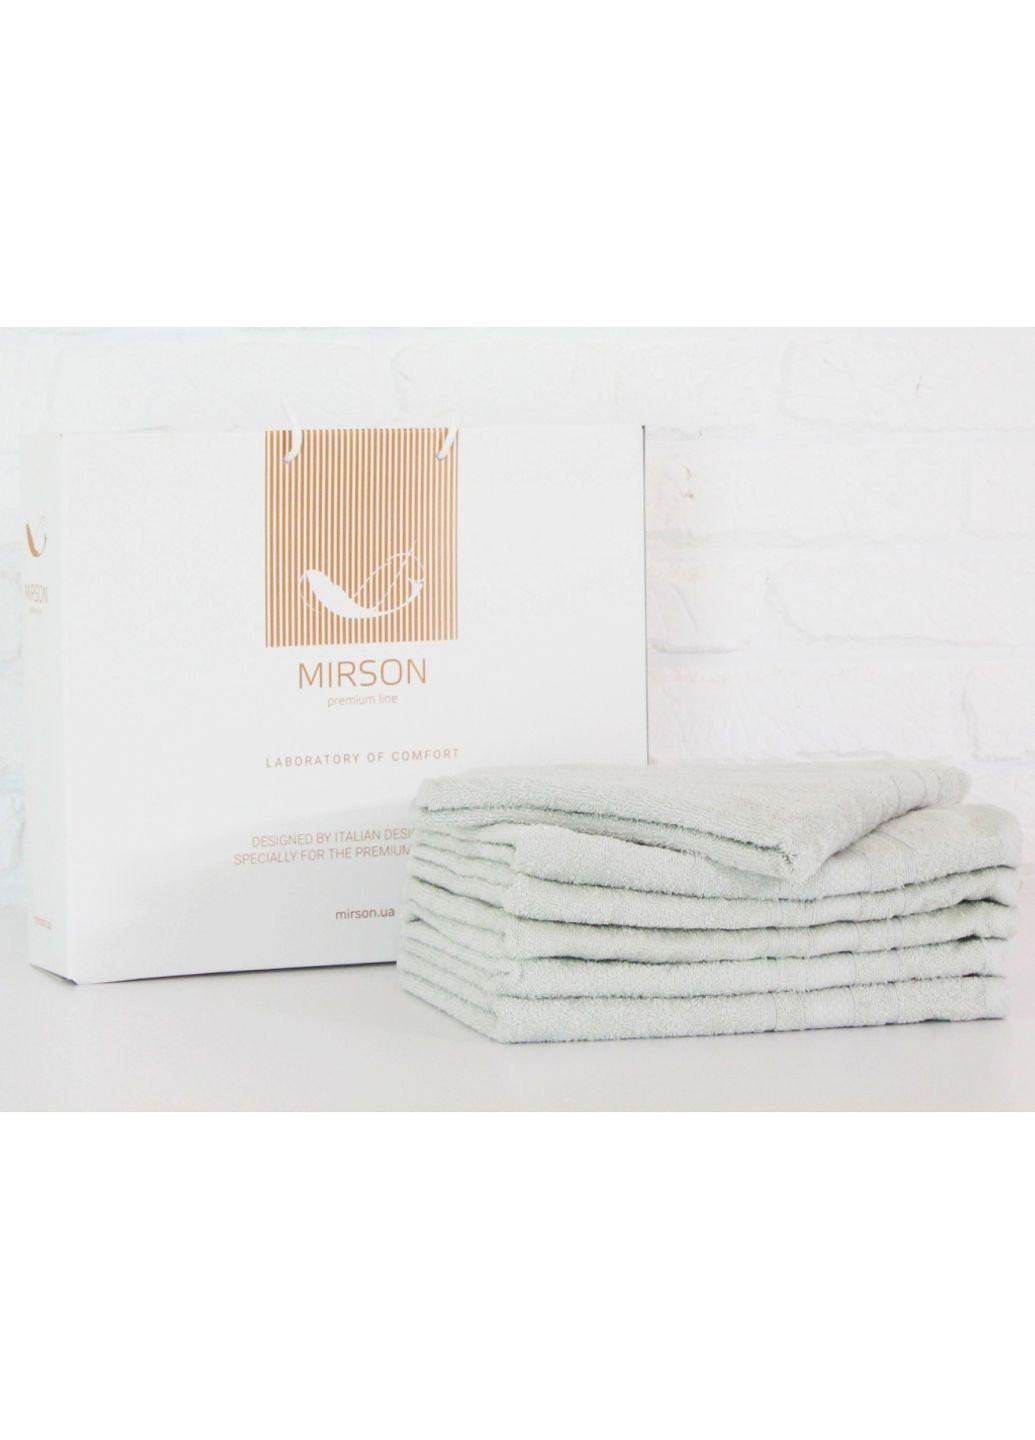 Mirson полотенце набор банных №5078 elite softness menthol 50х90 6 шт (2200003524024) мятный производство - Украина